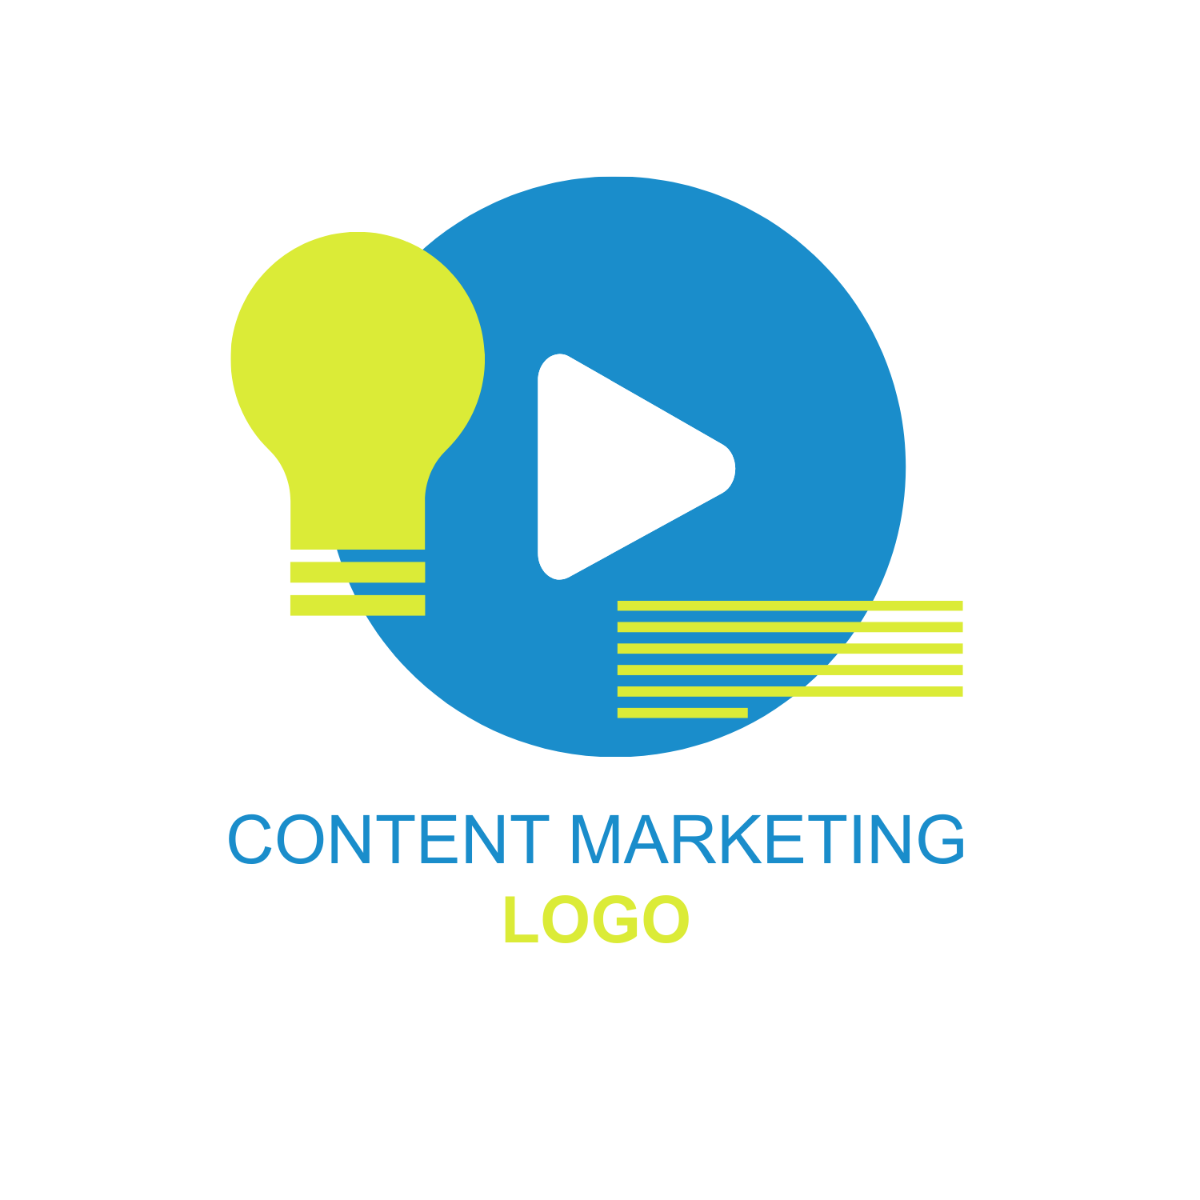 Free Content Marketing Logo Template